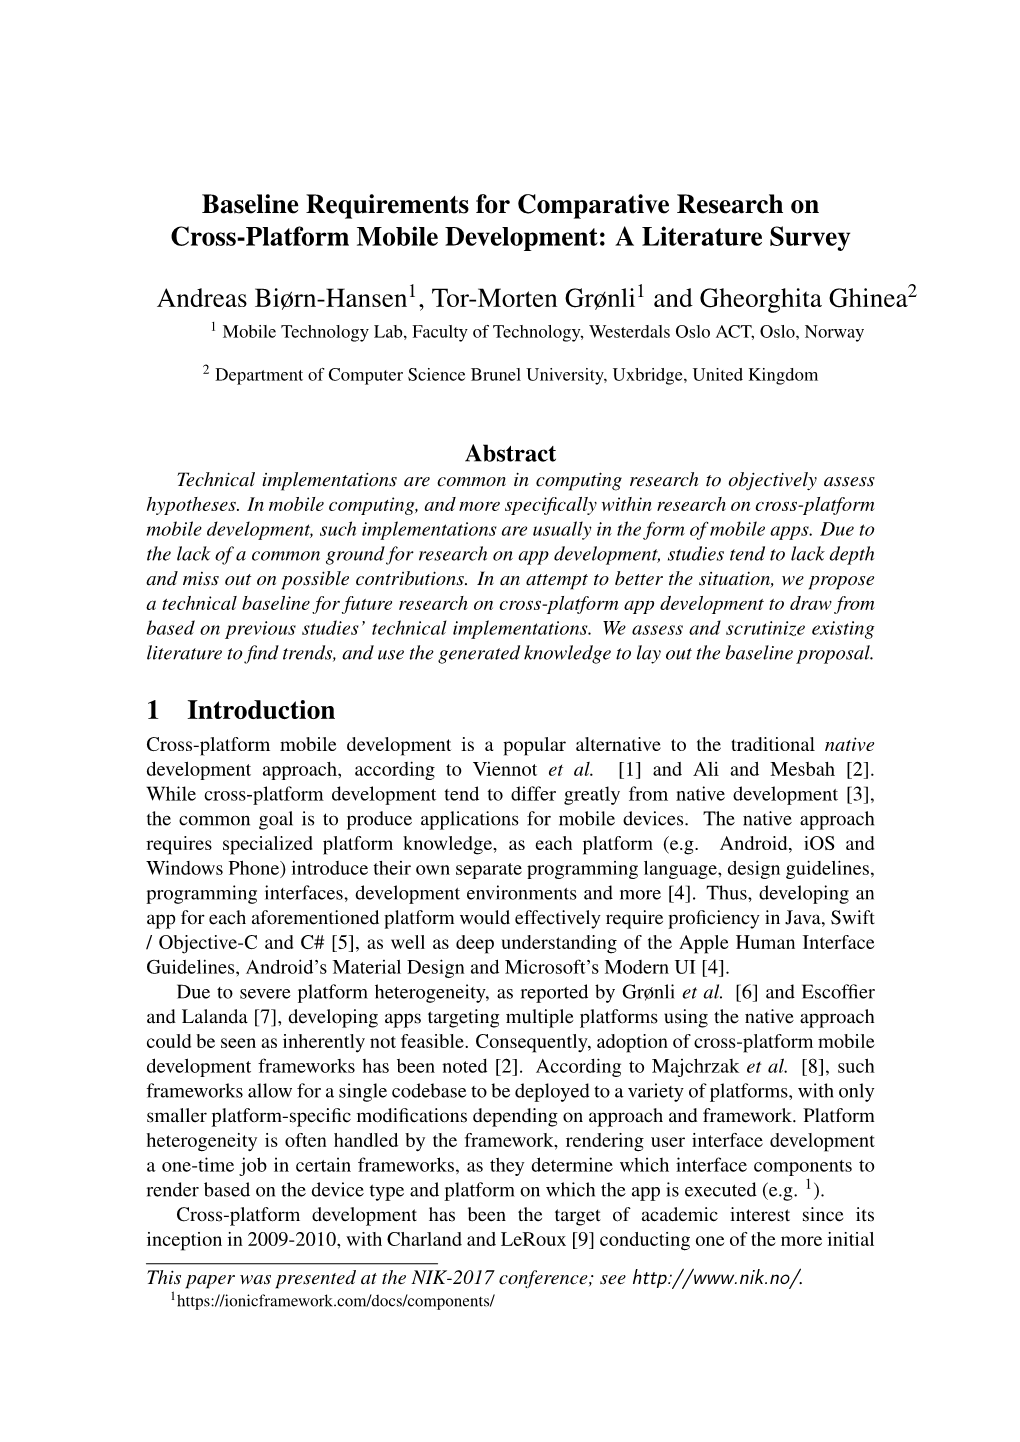 Baseline Requirements for Comparative Research on Cross-Platform Mobile Development: a Literature Survey Andreas Biørn-Hansen1